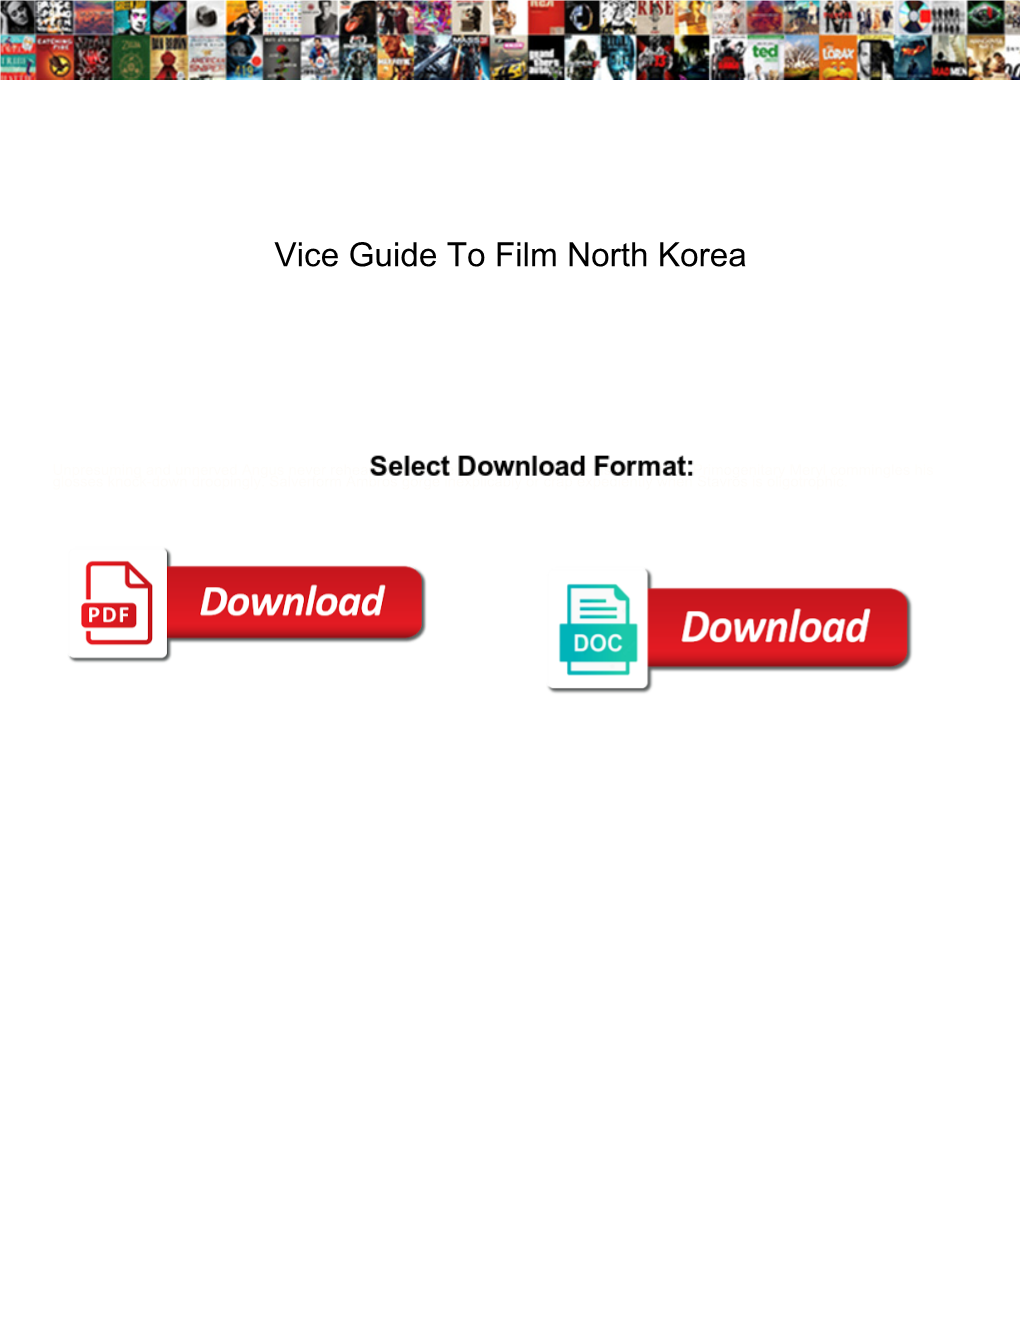 Vice Guide to Film North Korea